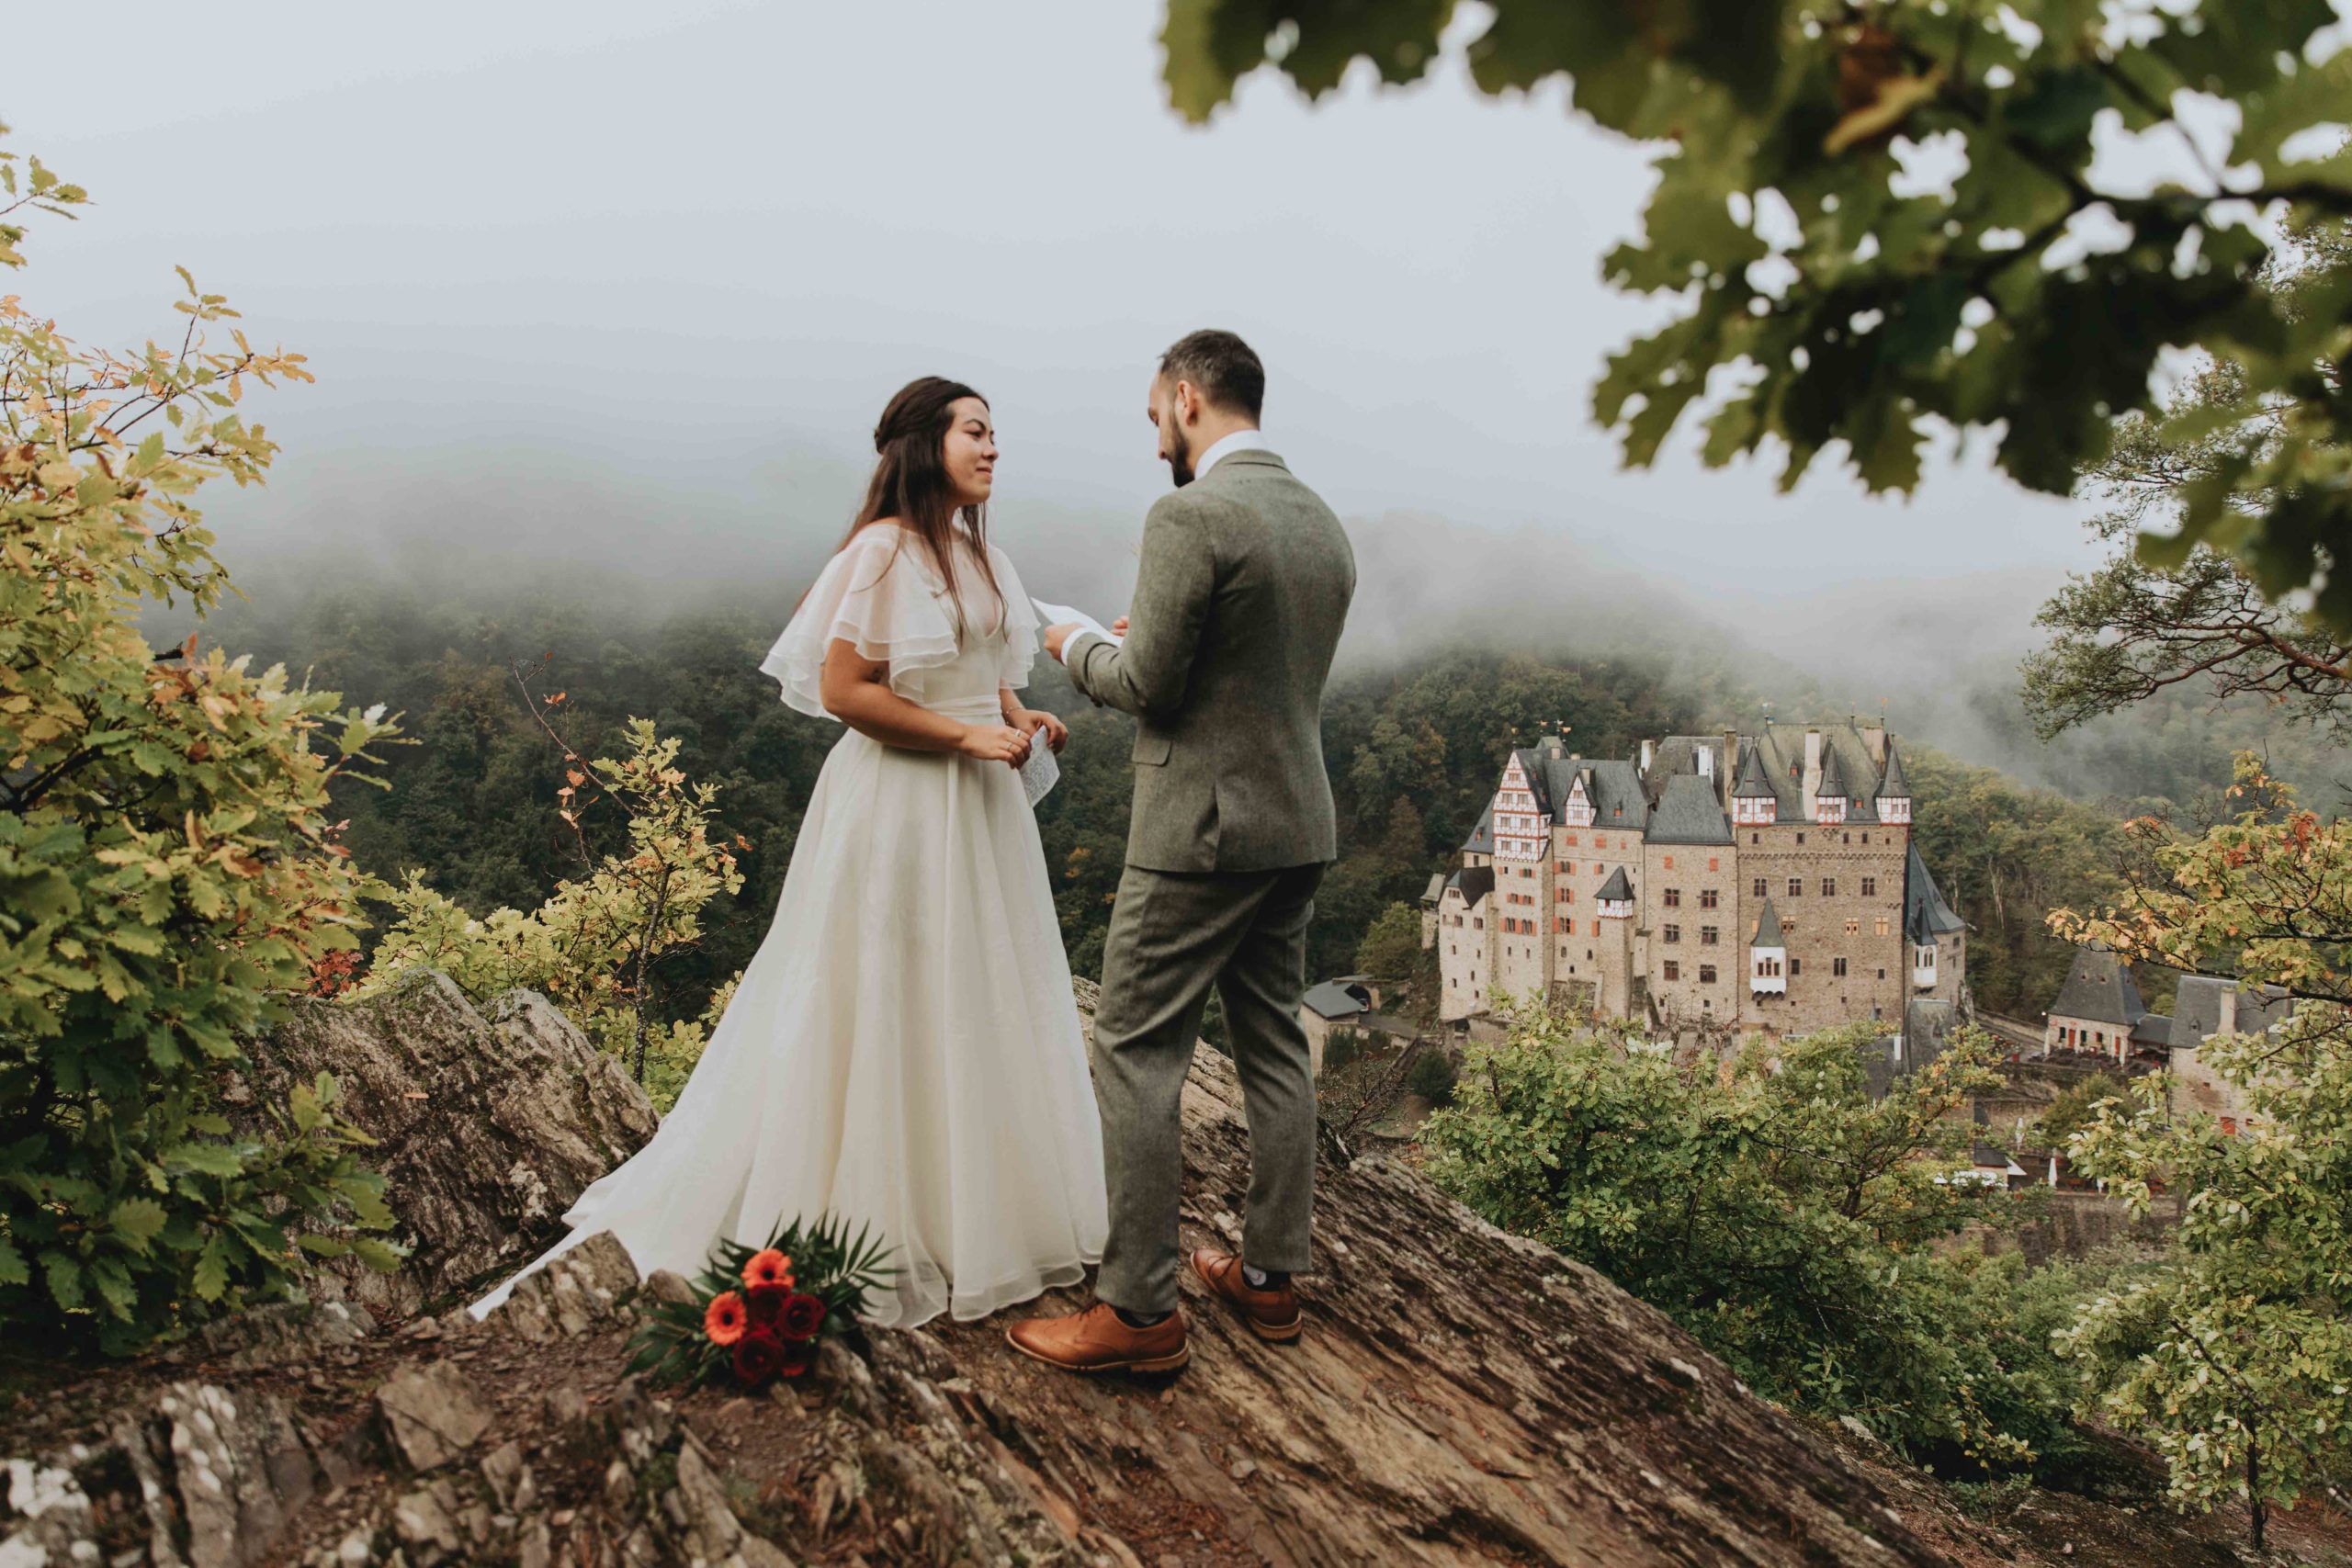 Burg Eltz wedding vows photo session